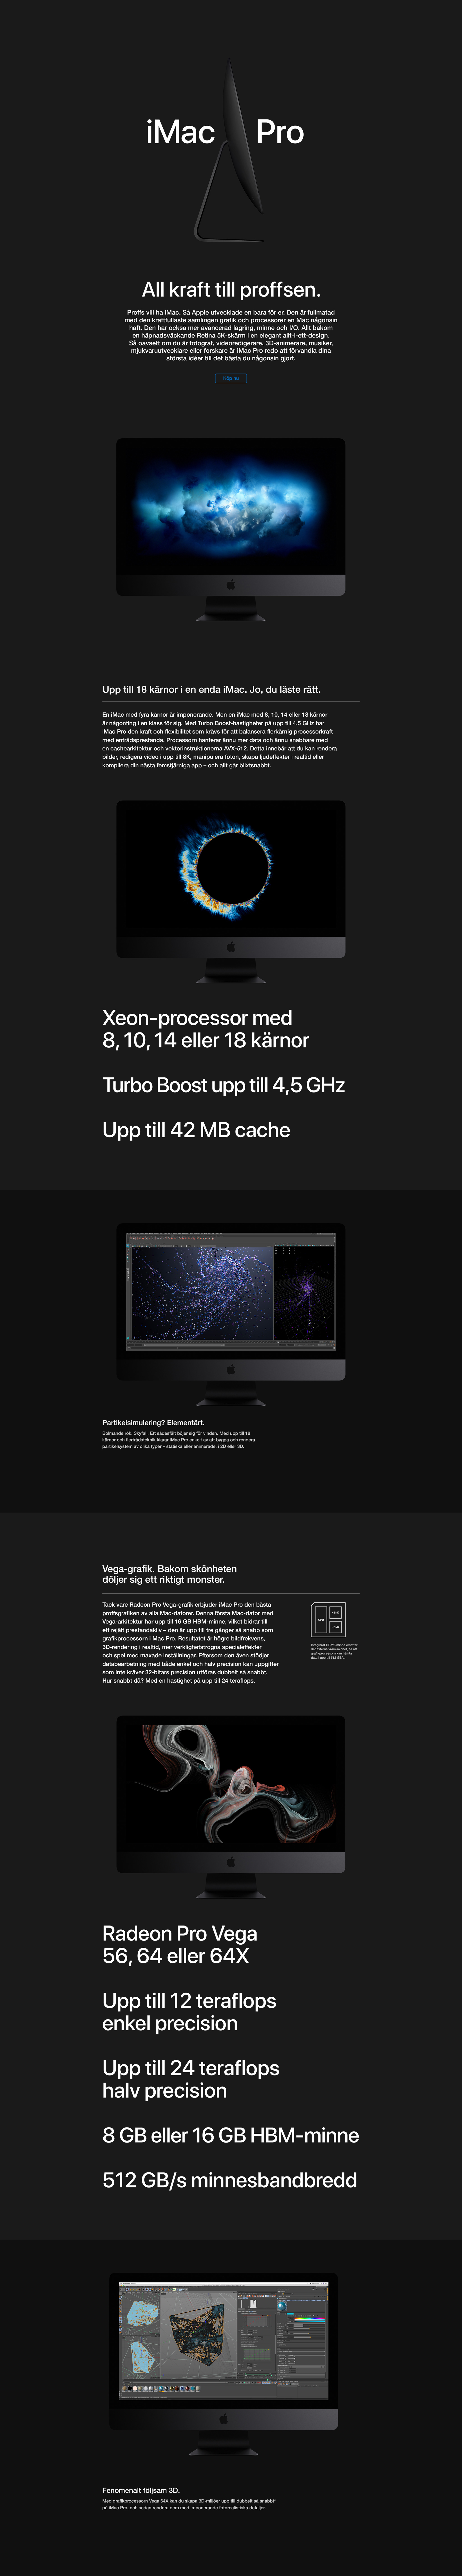 iMac Pro 2019